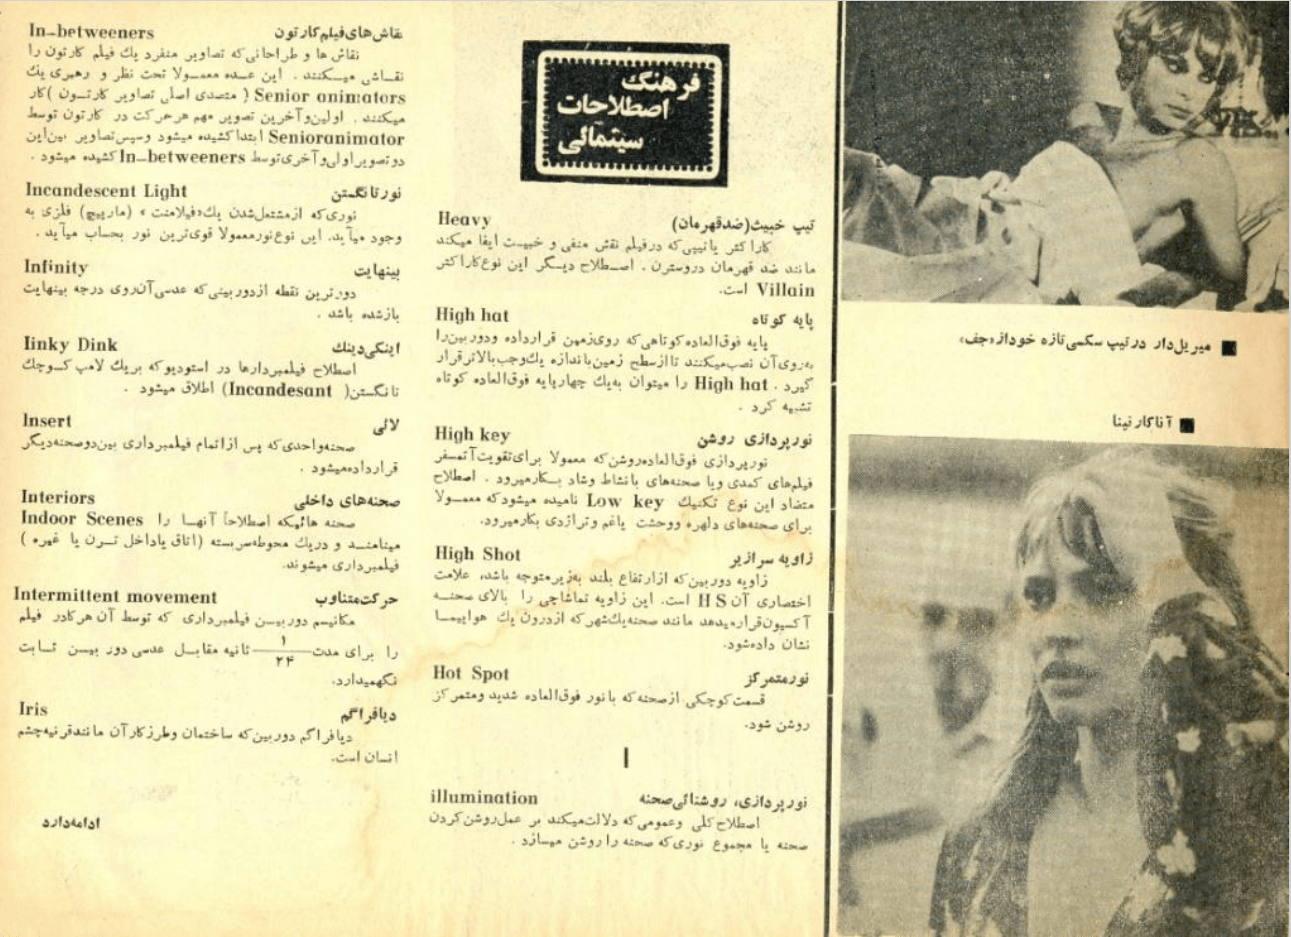 Cinema Star (September 10, 1969) - KHAJISTAN™